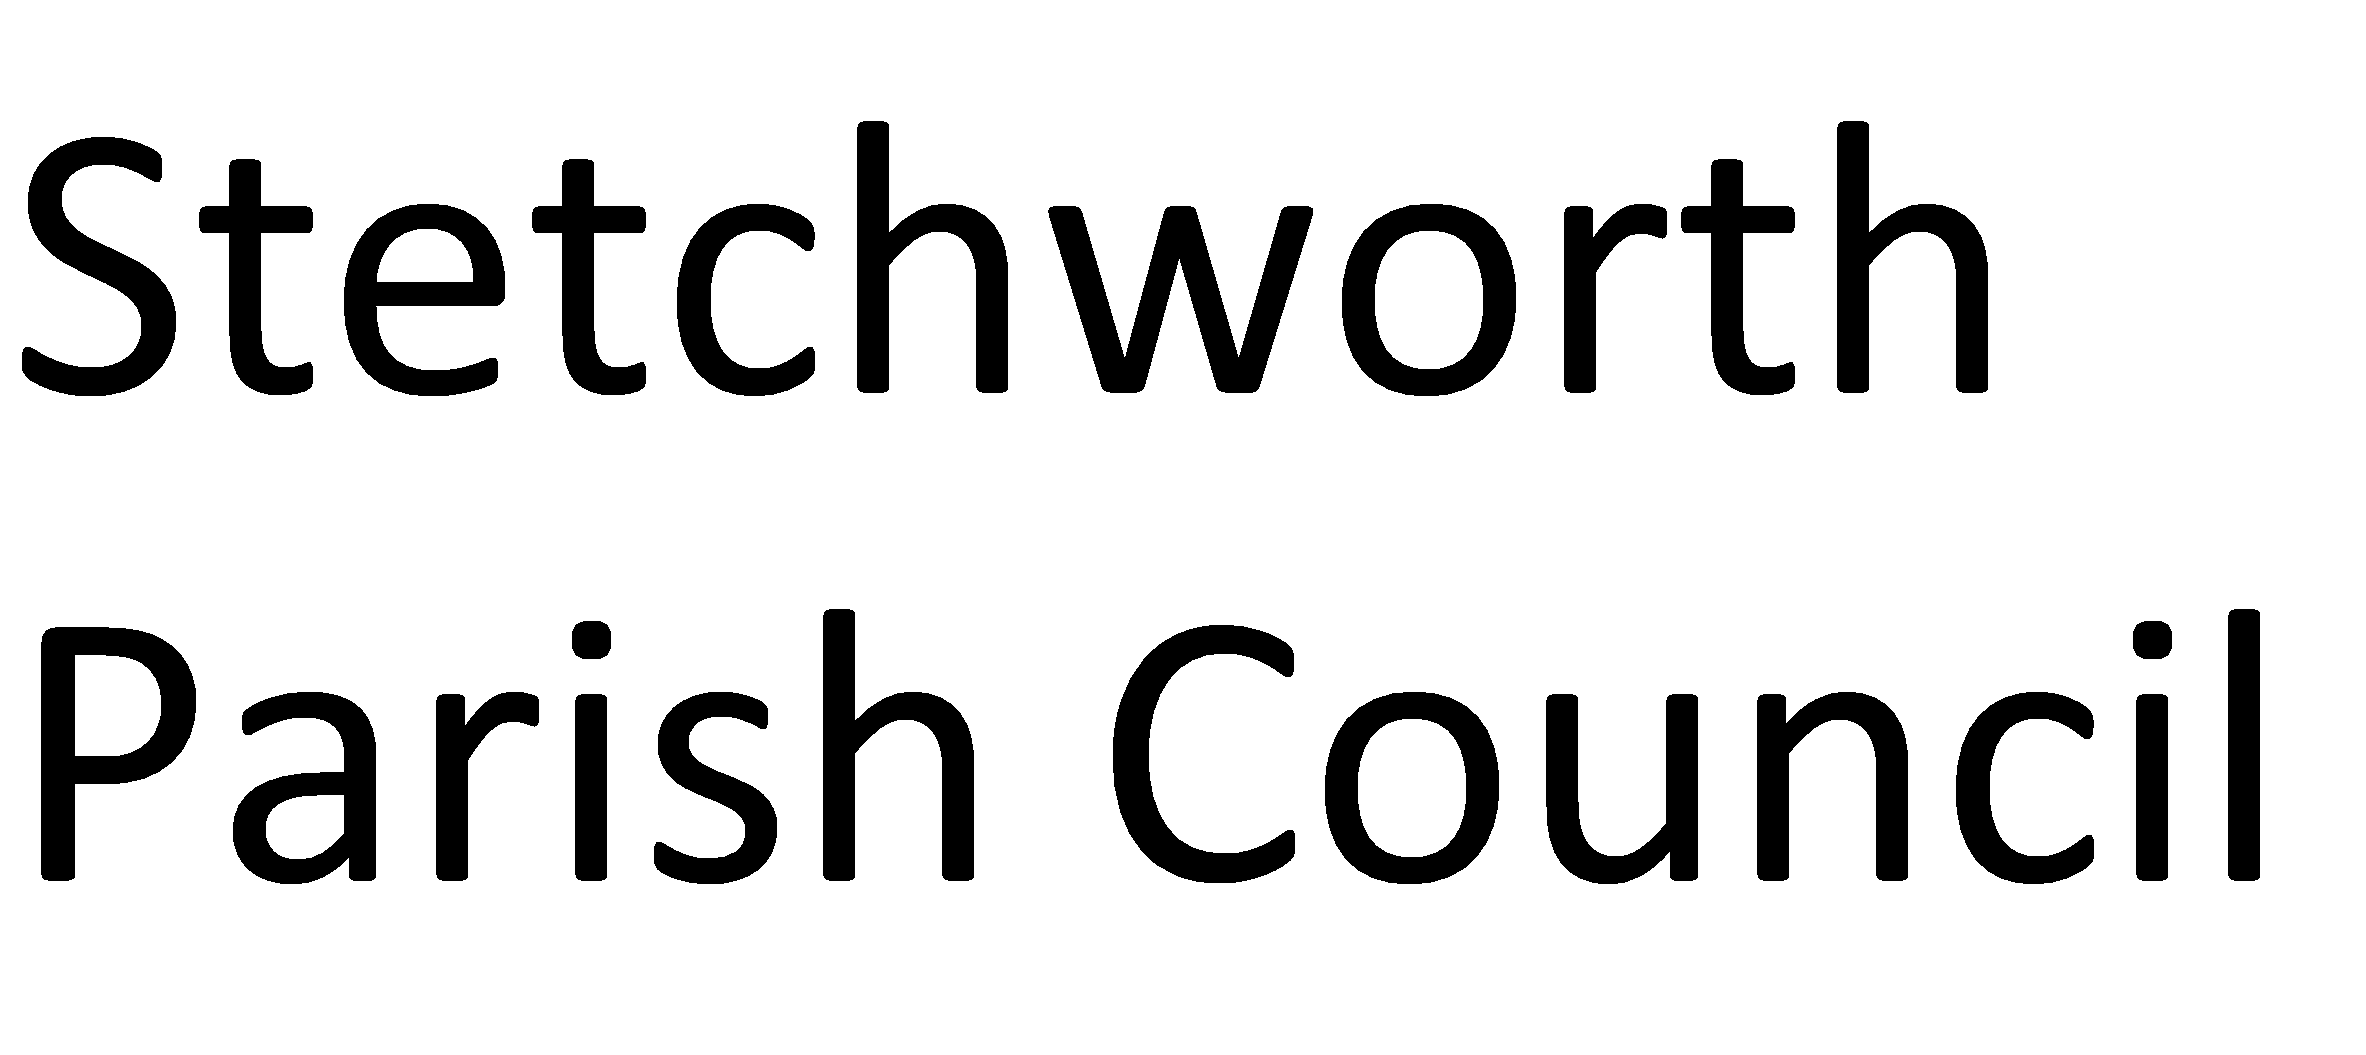 Stetchworth Parish Council